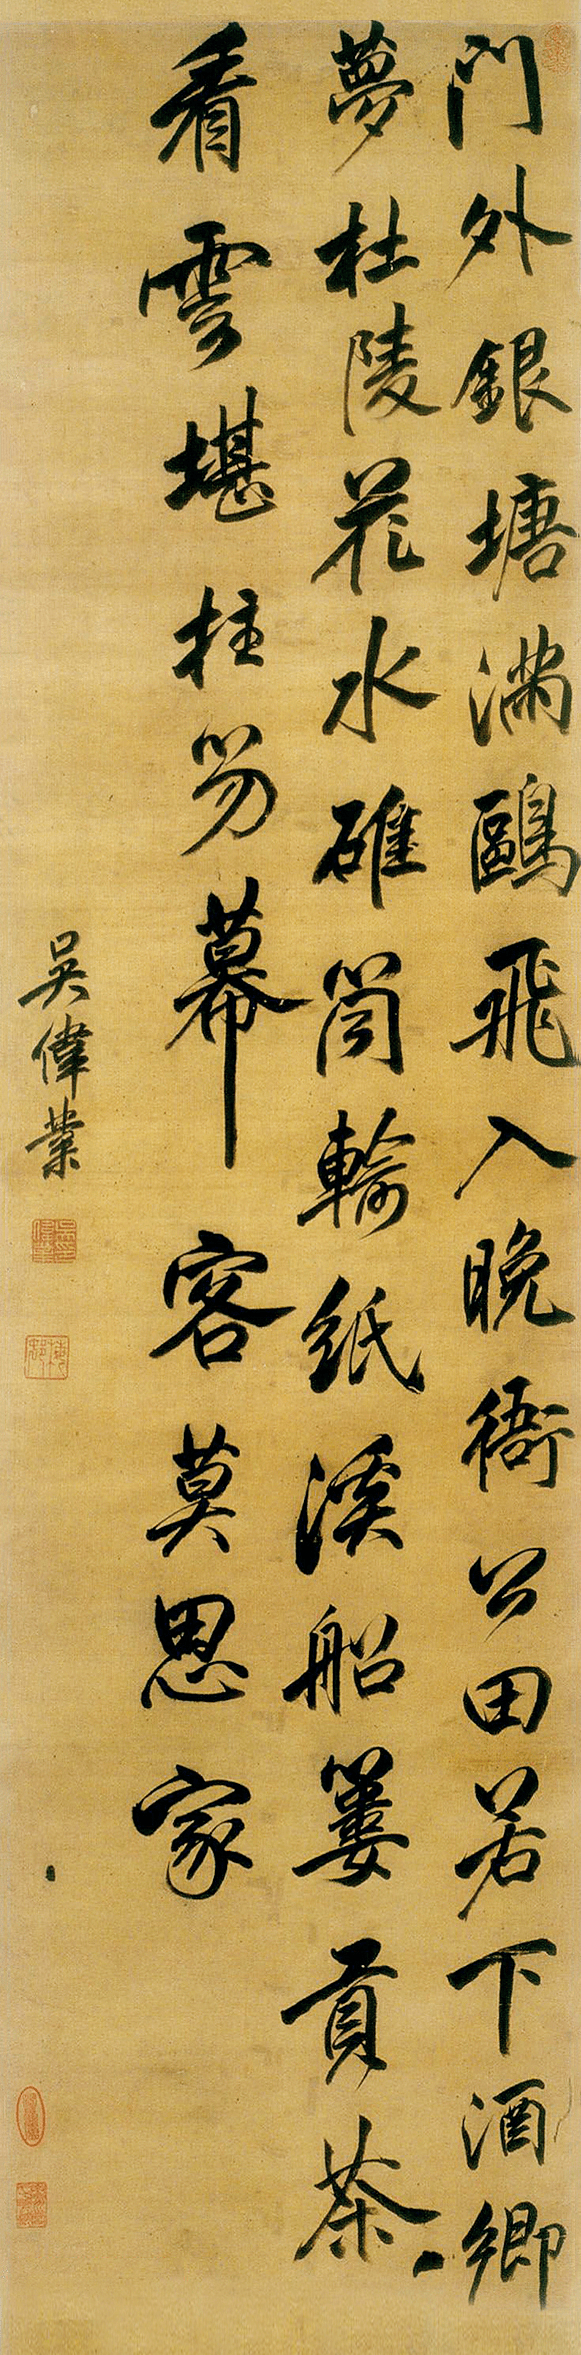 吴伟业(1609